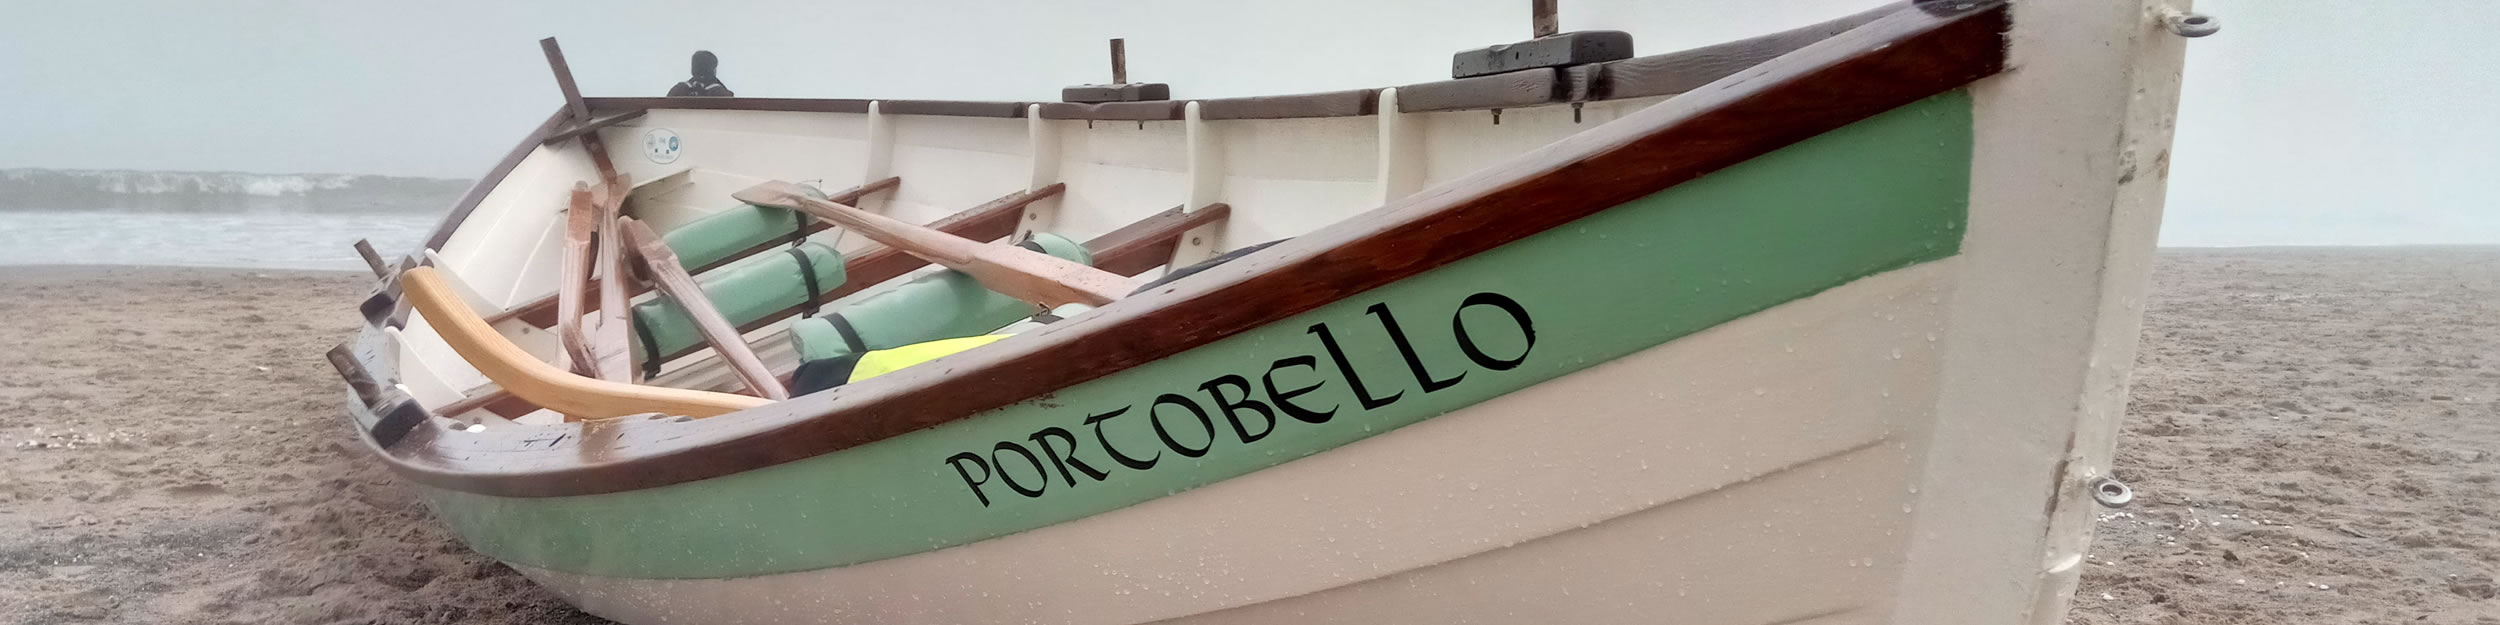 Portobello Sailing, Kayaking and Rowing Club